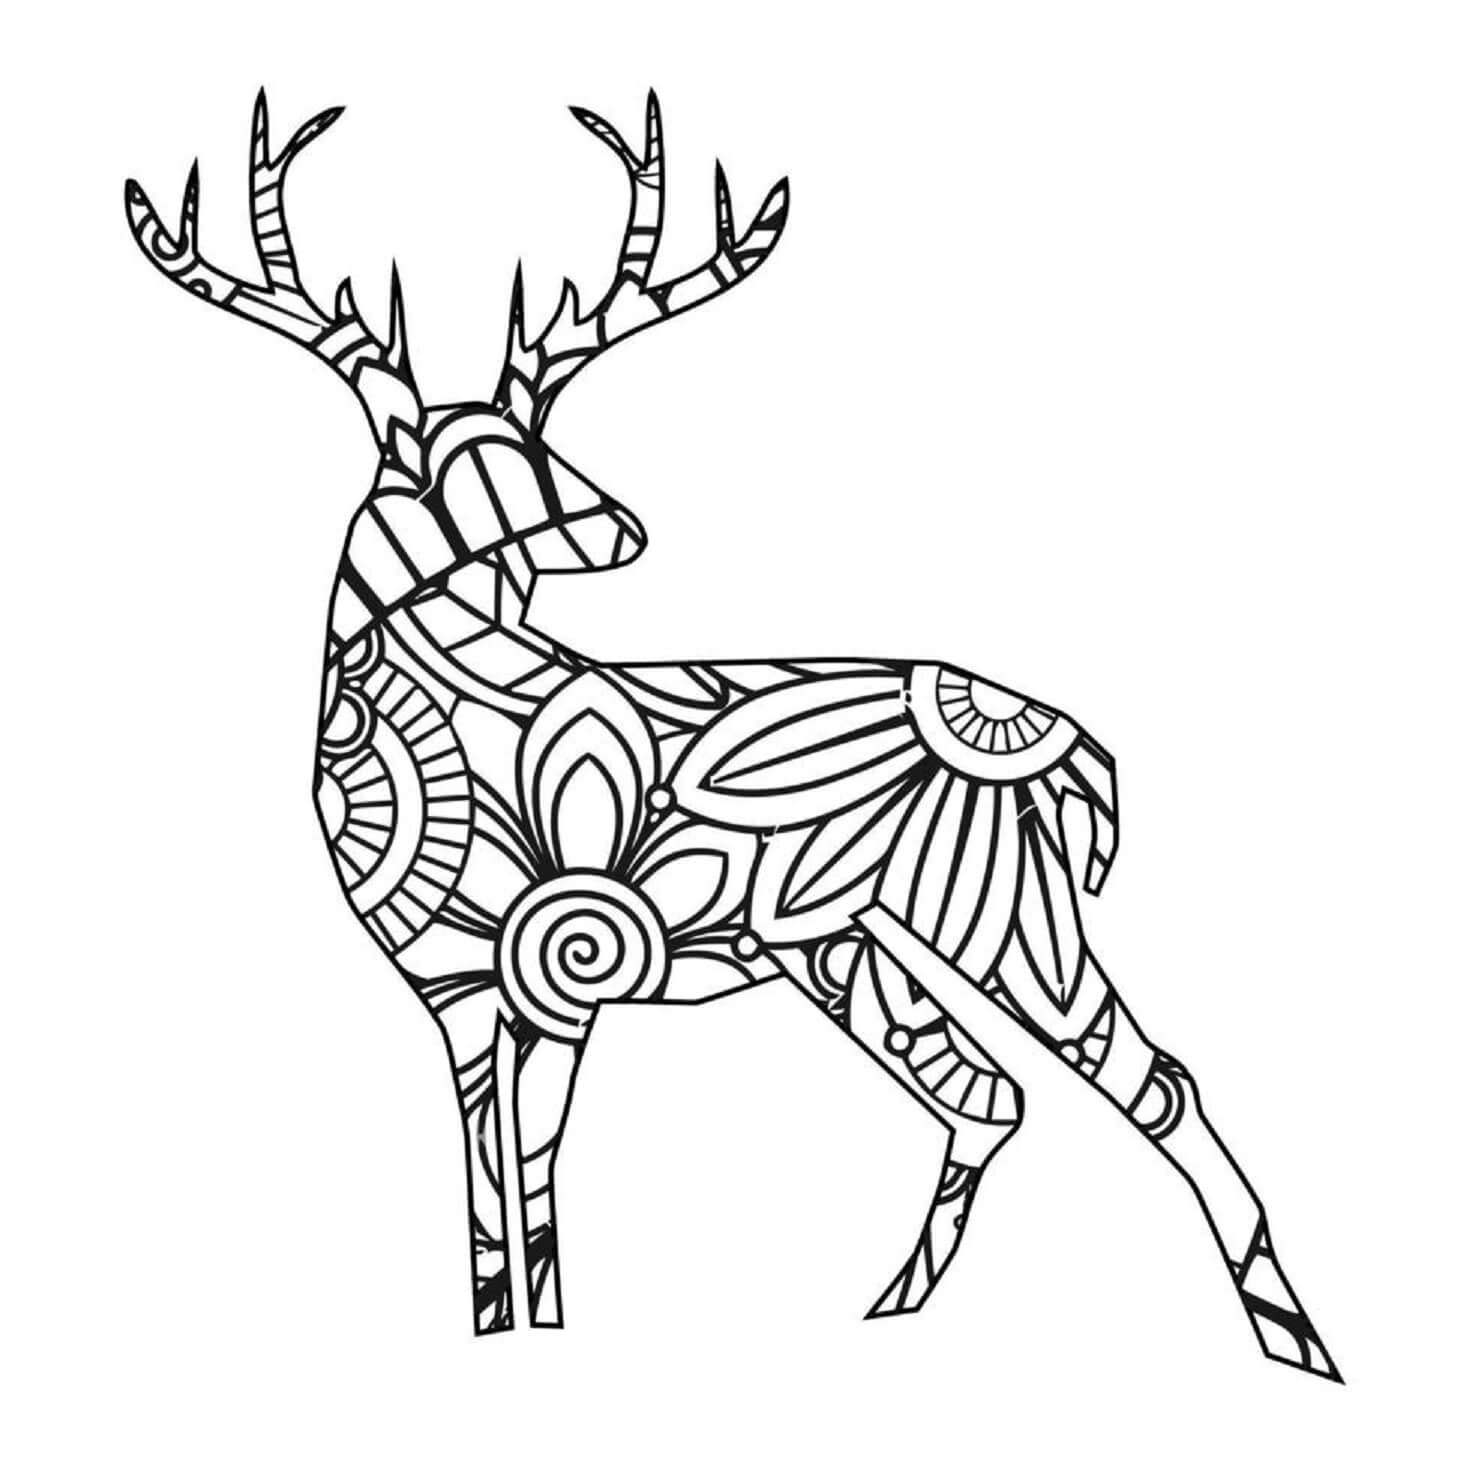 Mandala Deer Coloring Page - Sheet 3 Mandalas